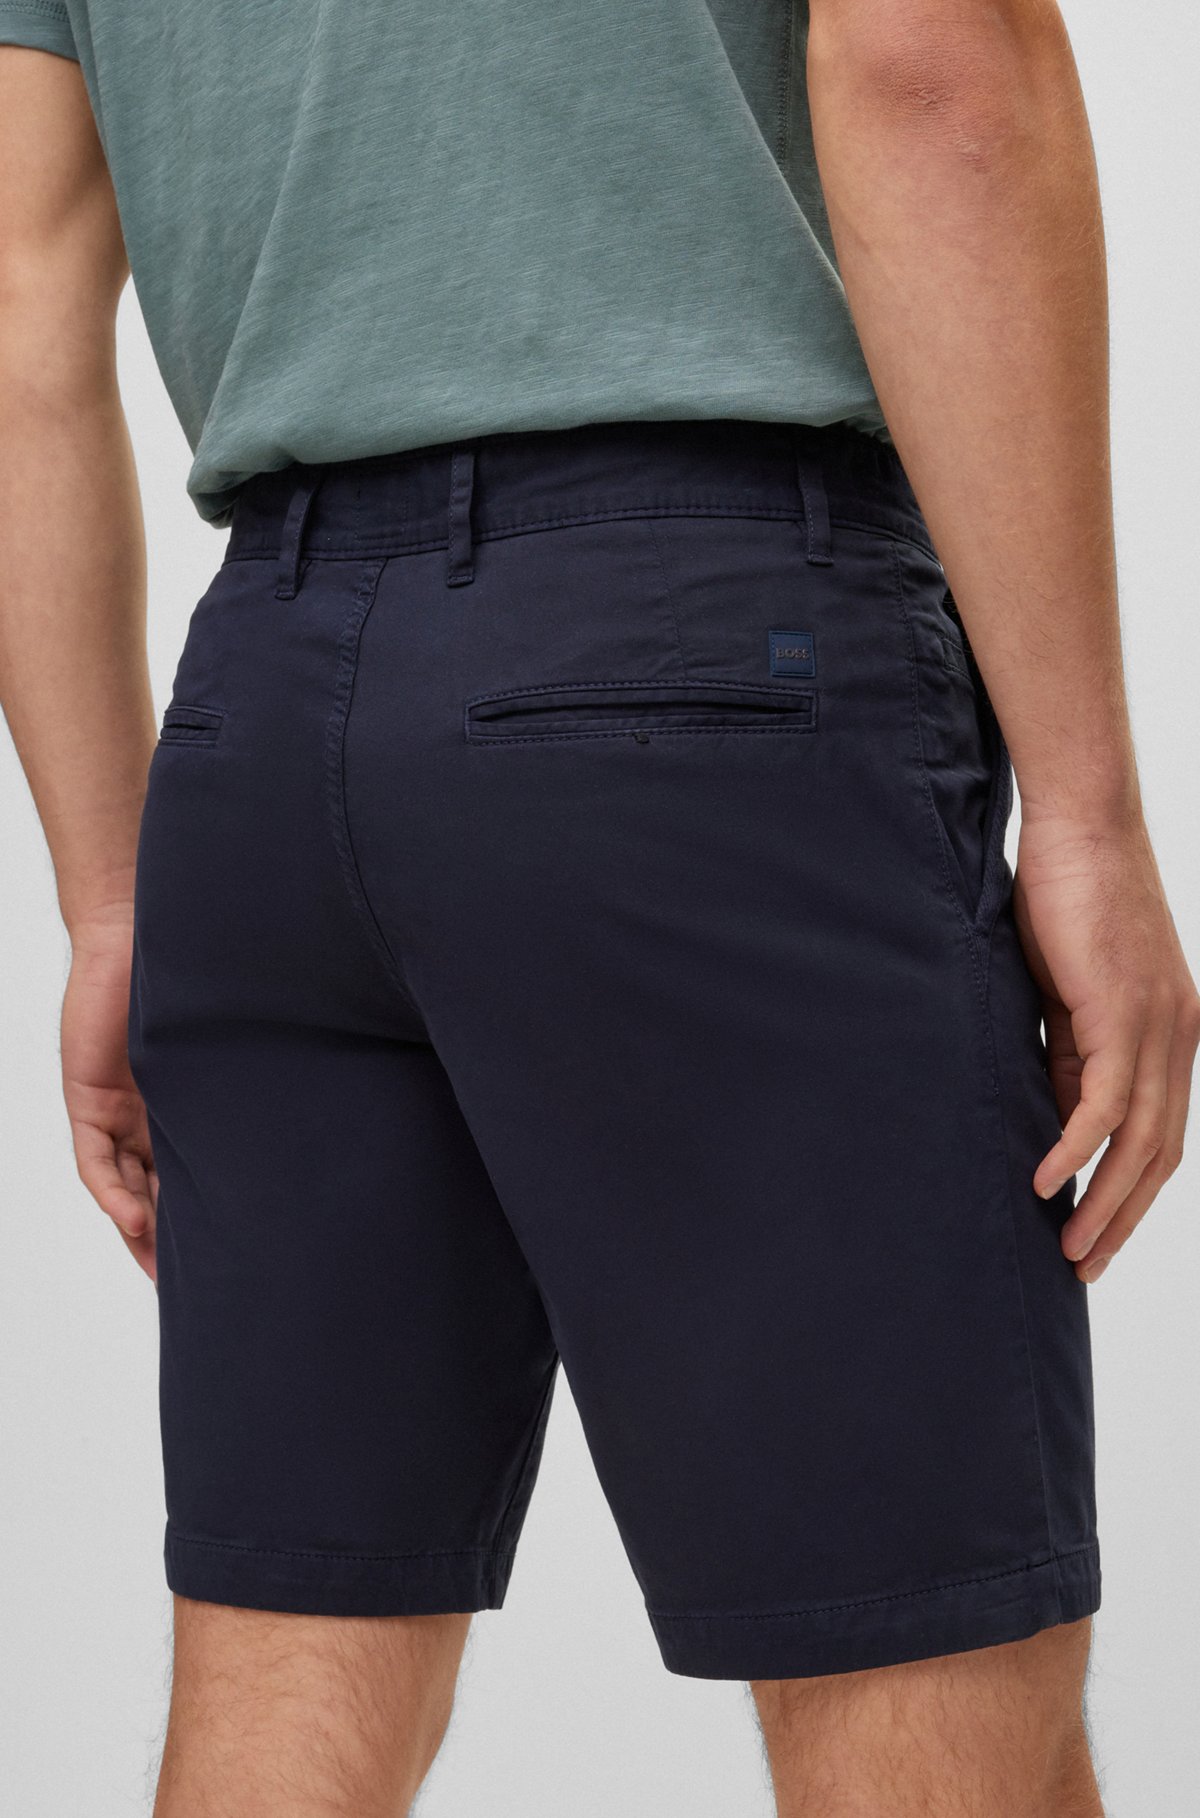 Shorts slim fit de tiro medio en algodón elástico, Azul oscuro